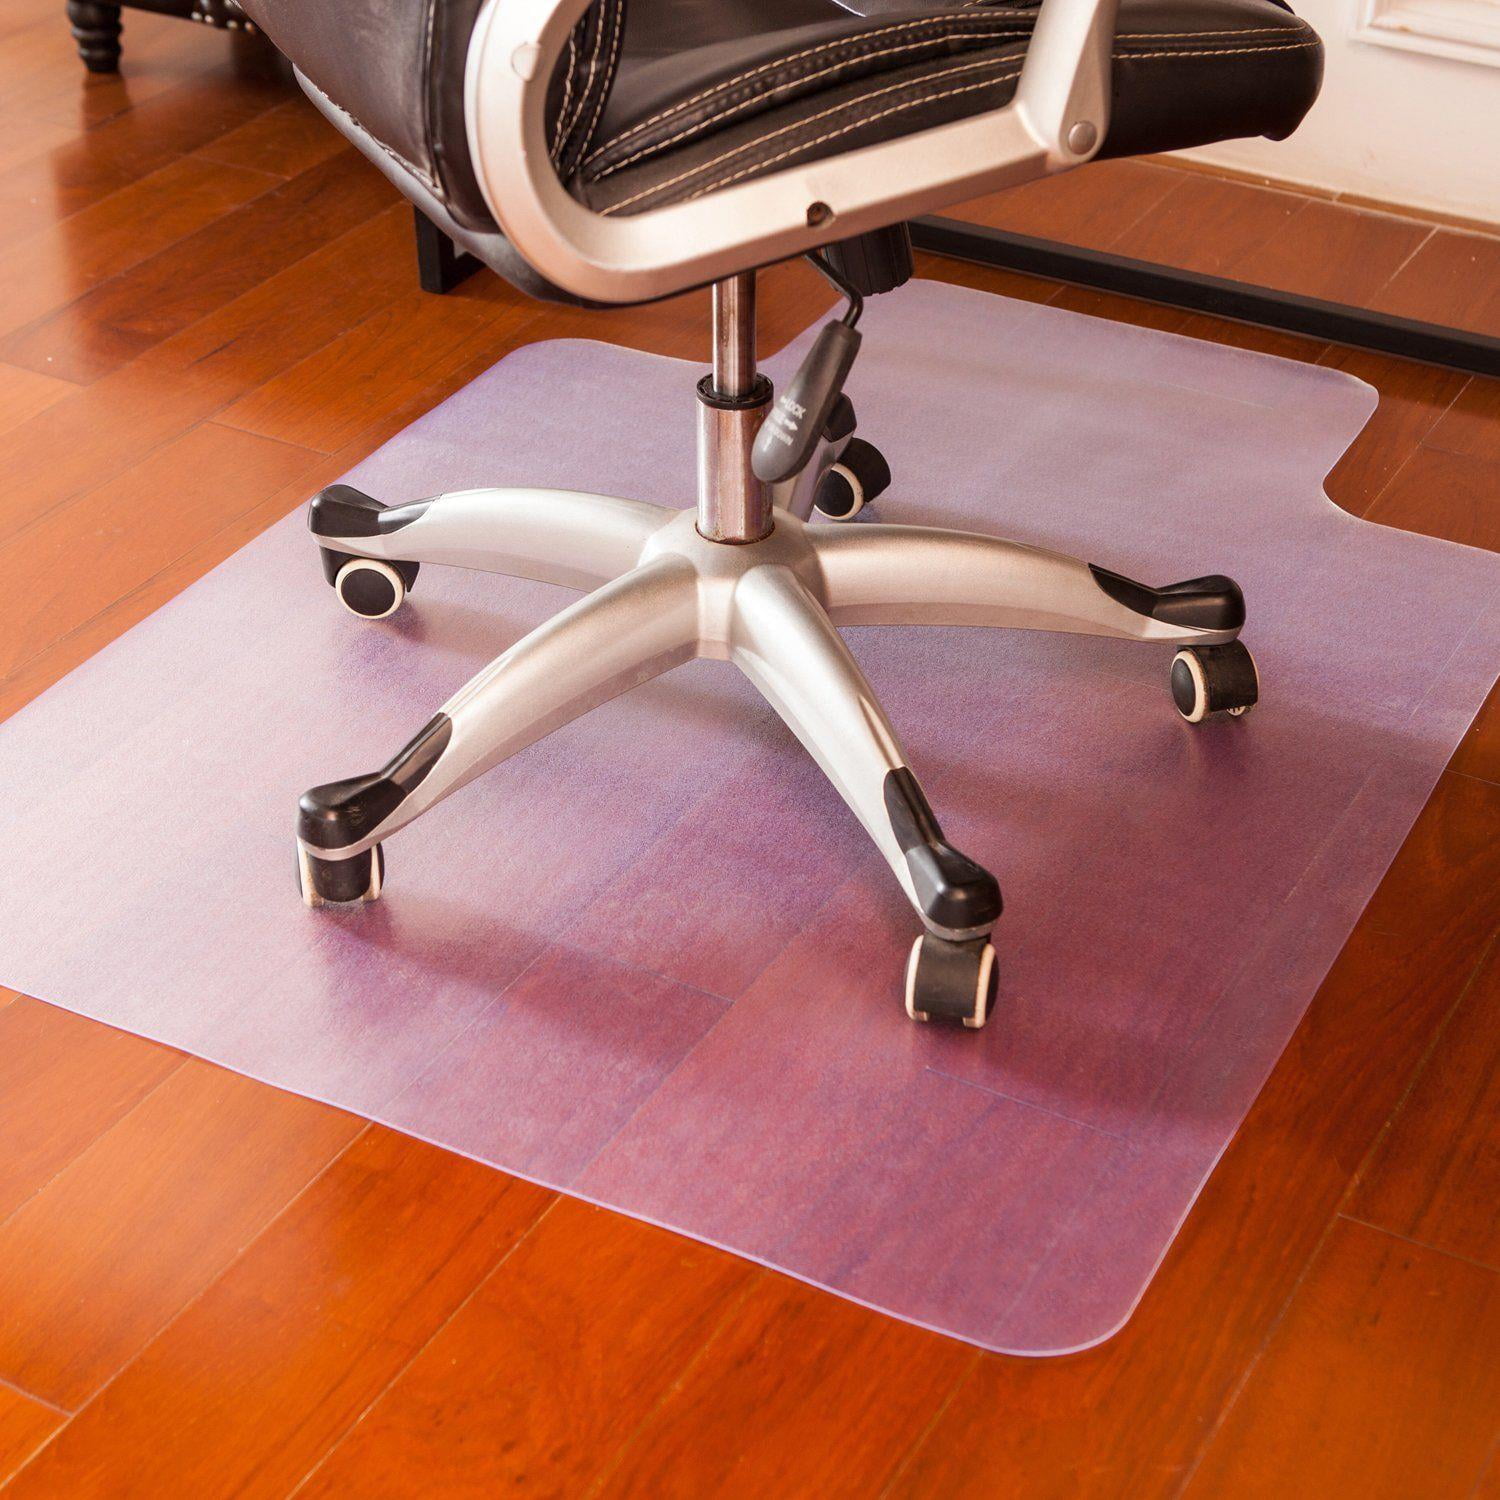 Ktaxon Office Chair Mat For Hardwood, Non Slip Hardwood Floor Protectors